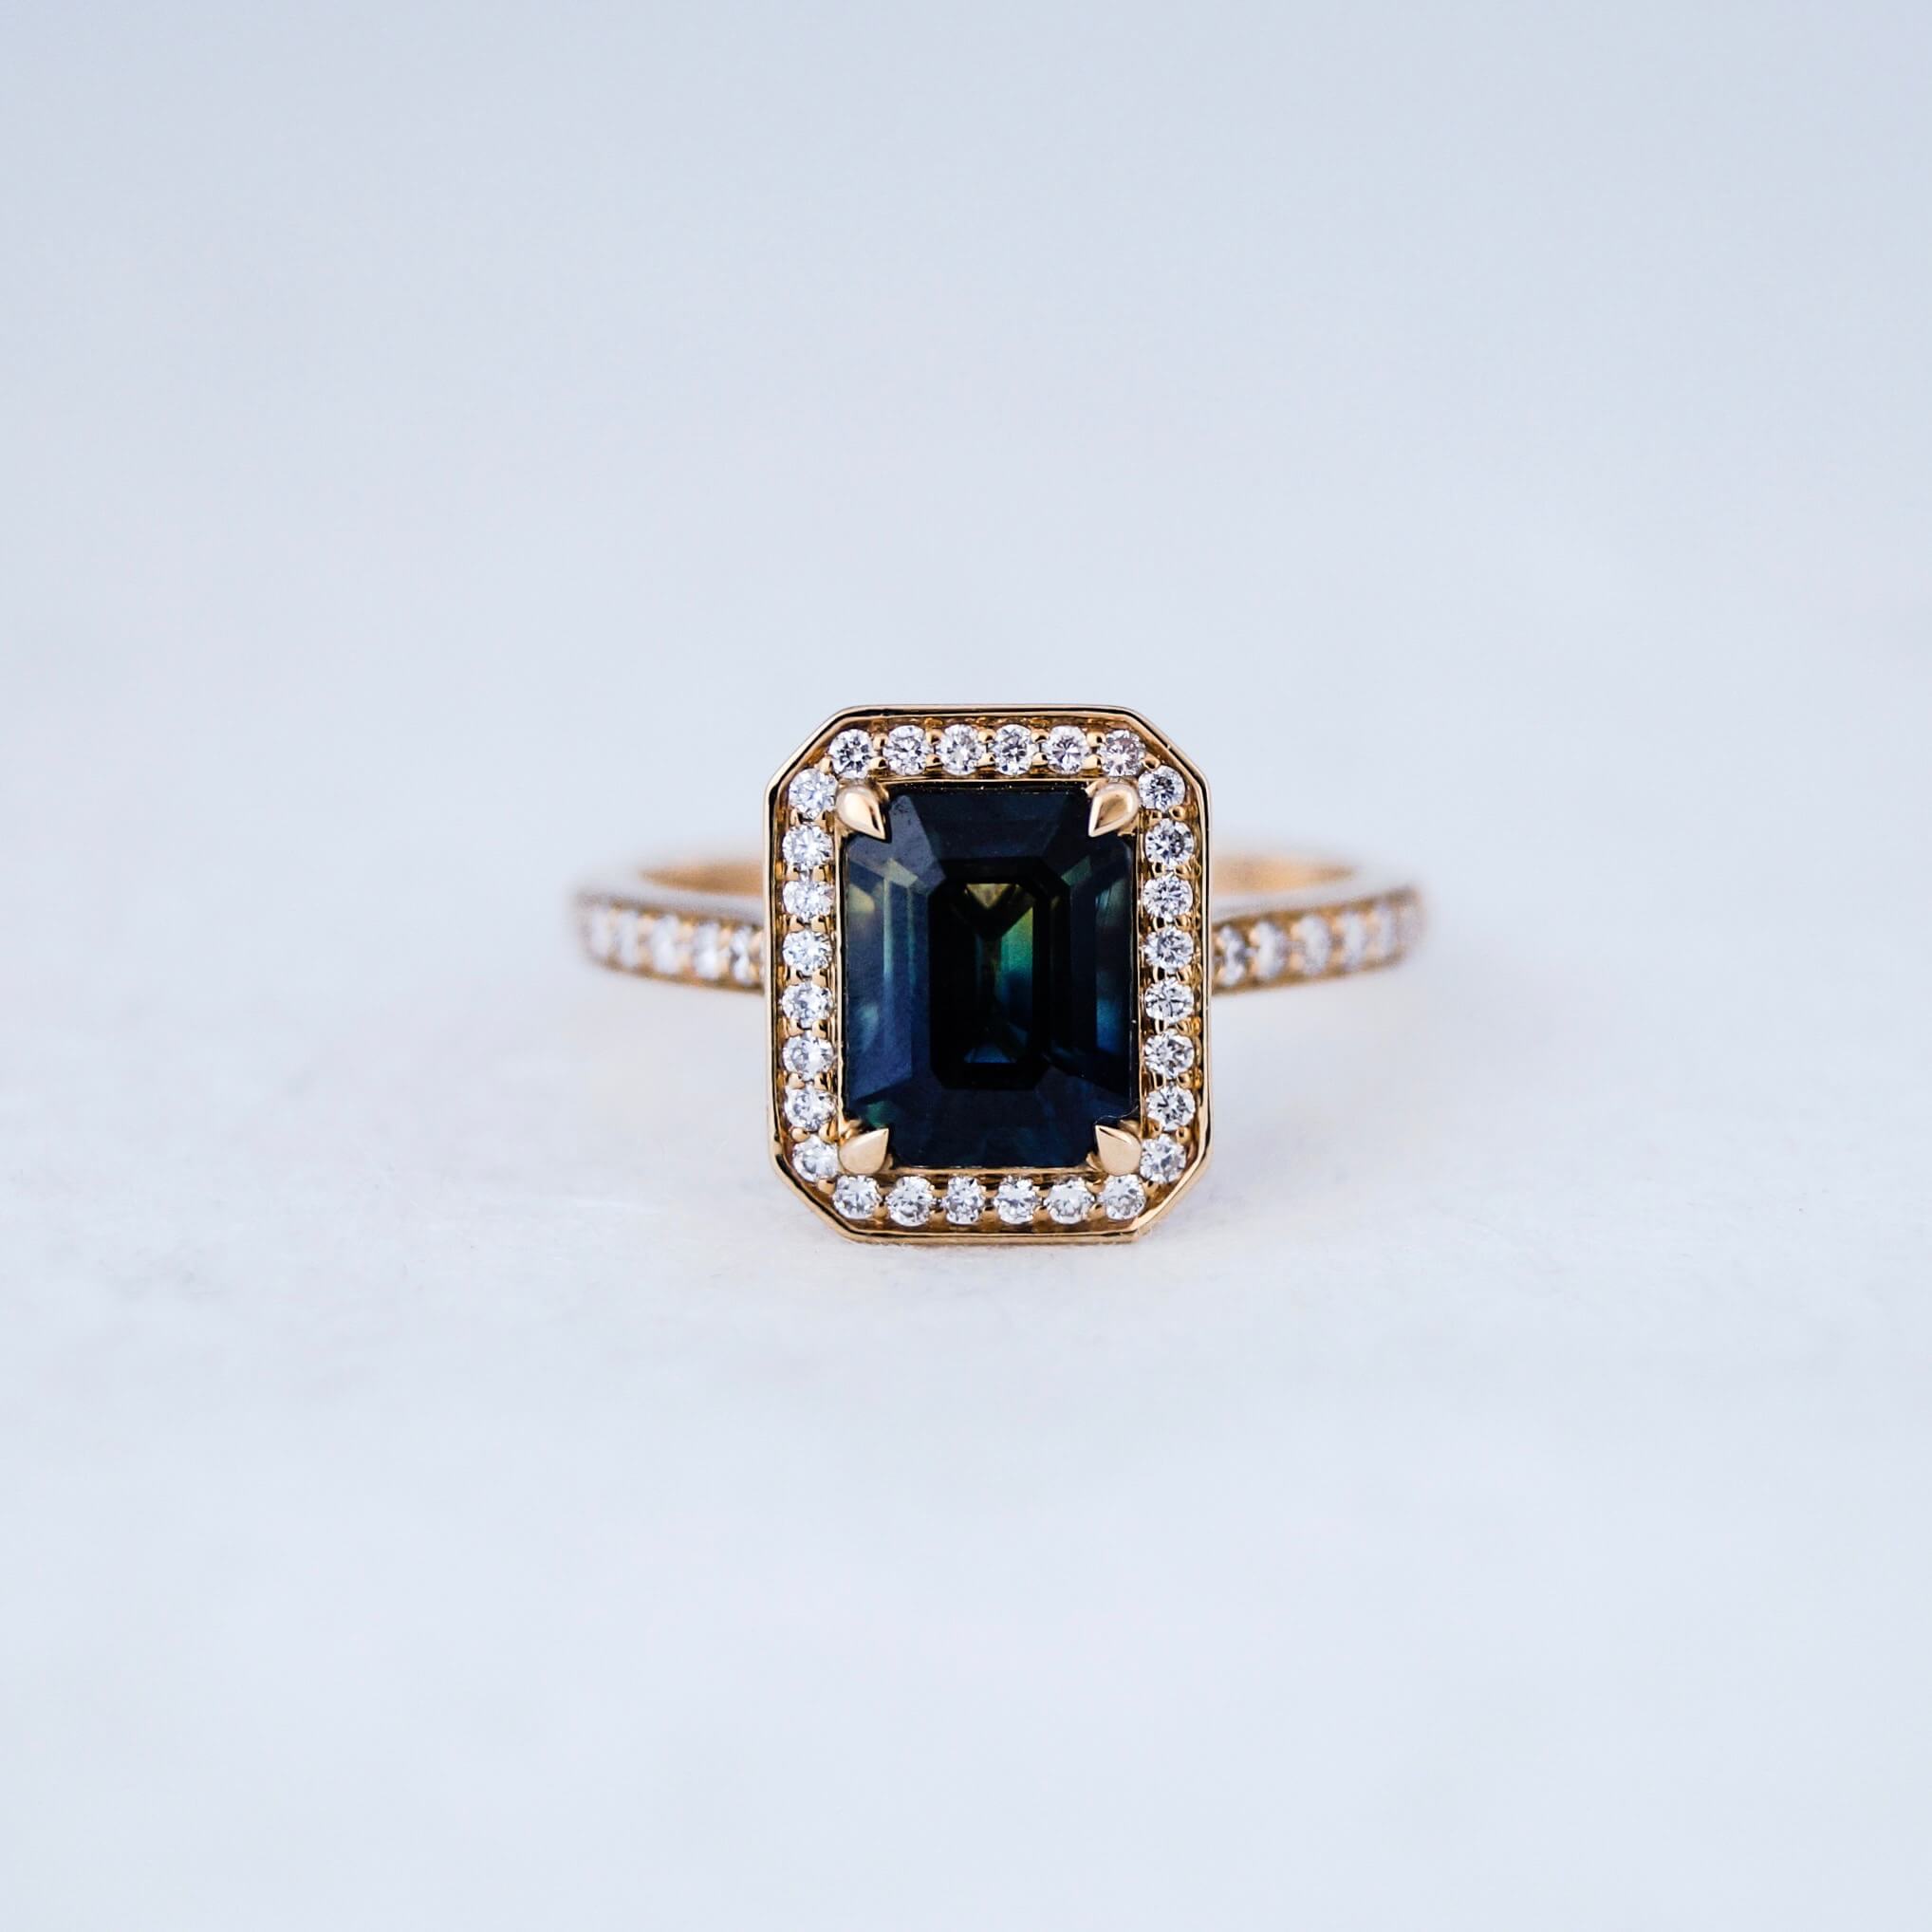 Australian Sapphire Emerald Cut Ring